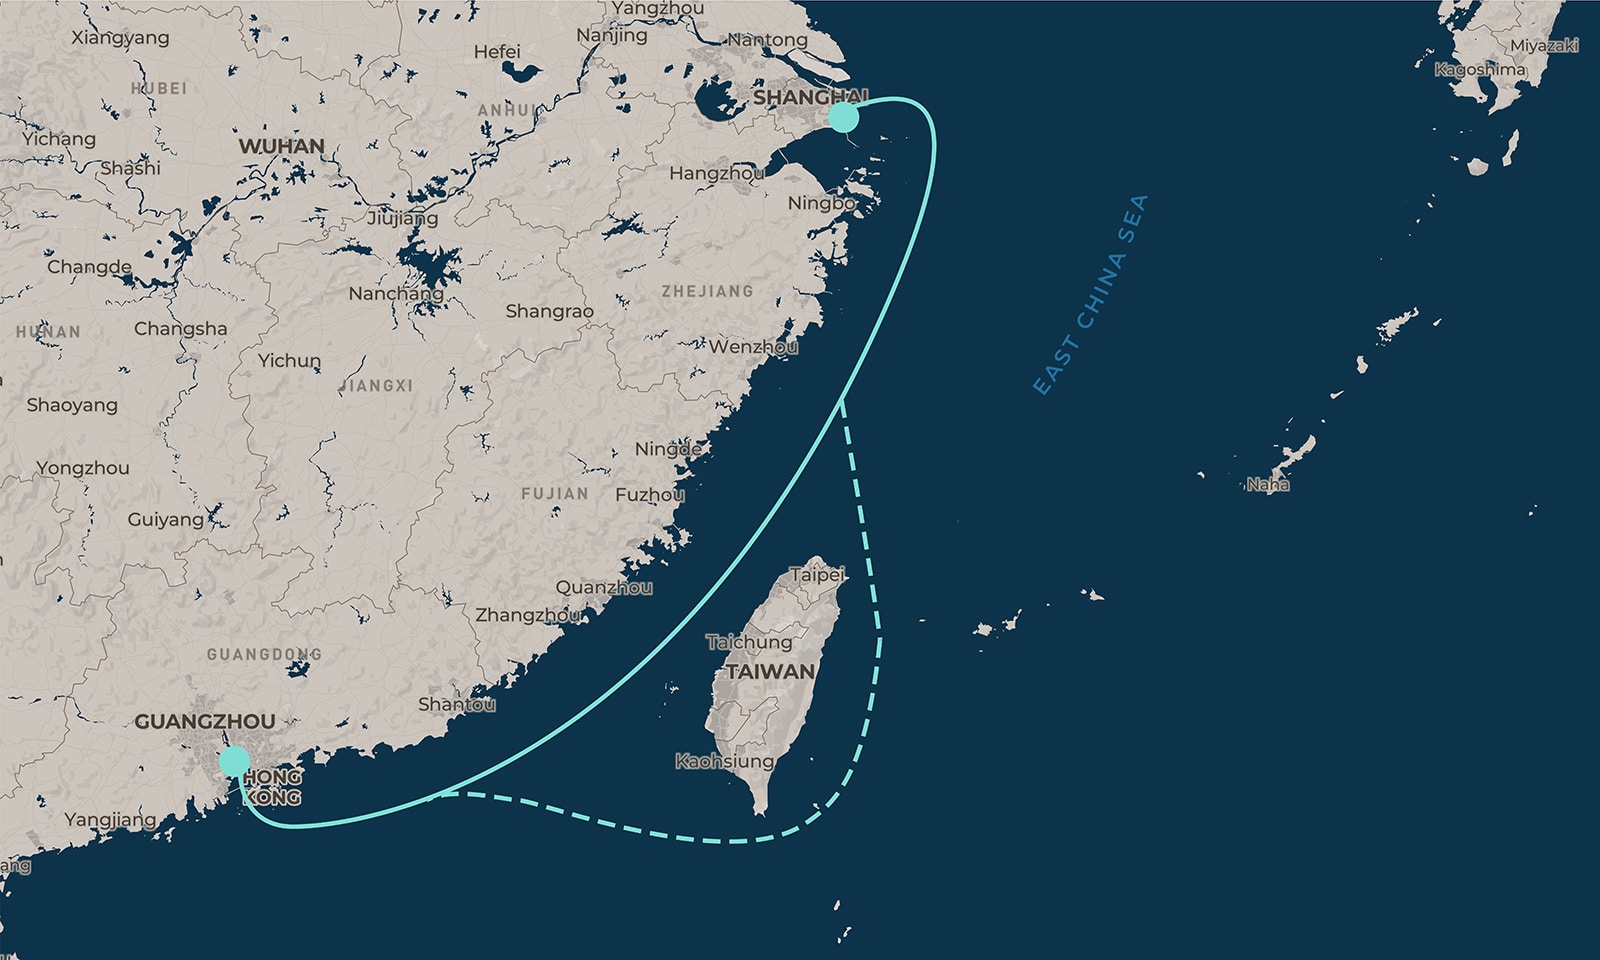 Clipper sailing ship route from Shanghai to Hong Kong